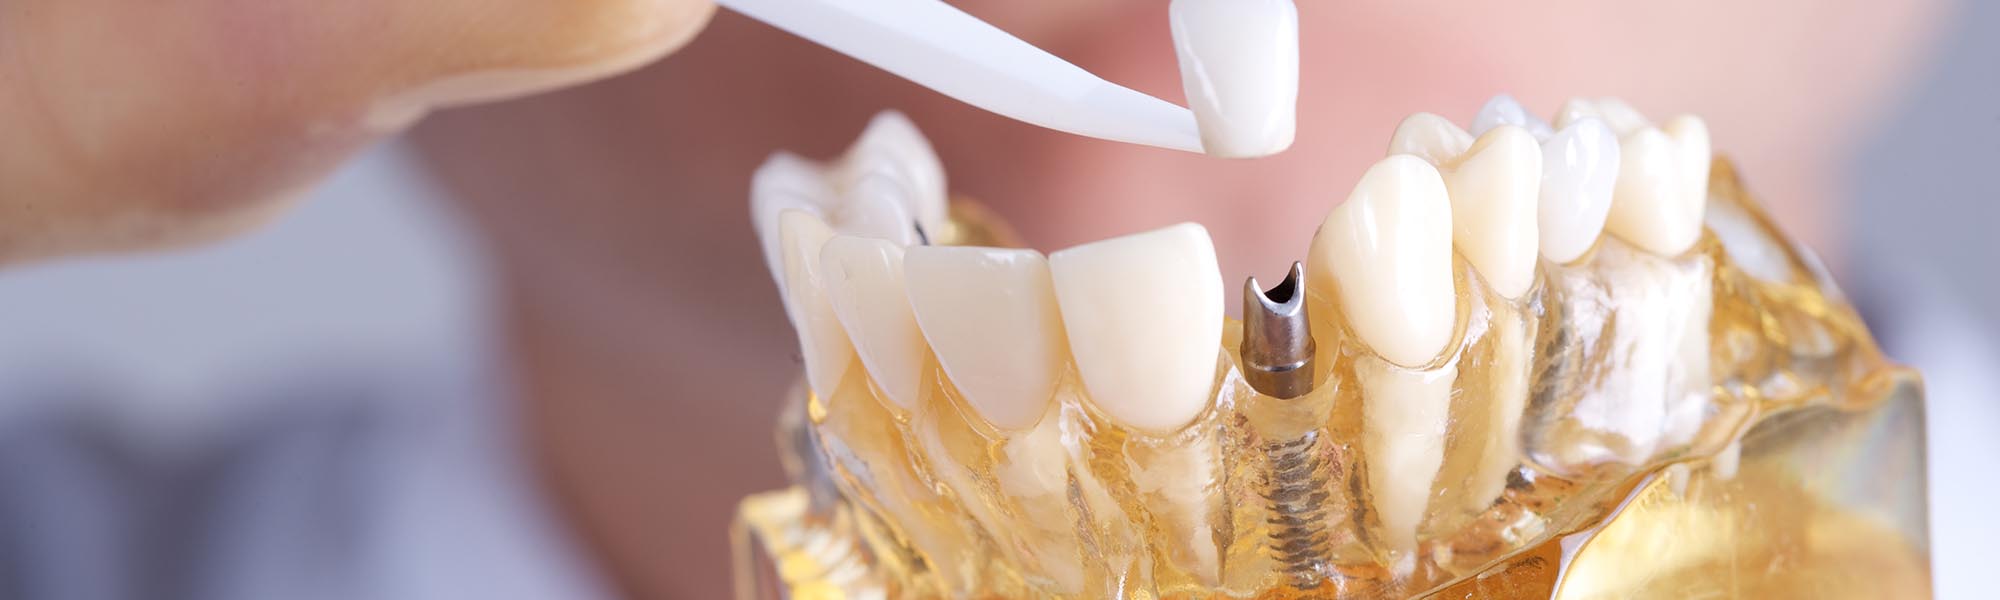 Dental Implants Dentists Carson CA